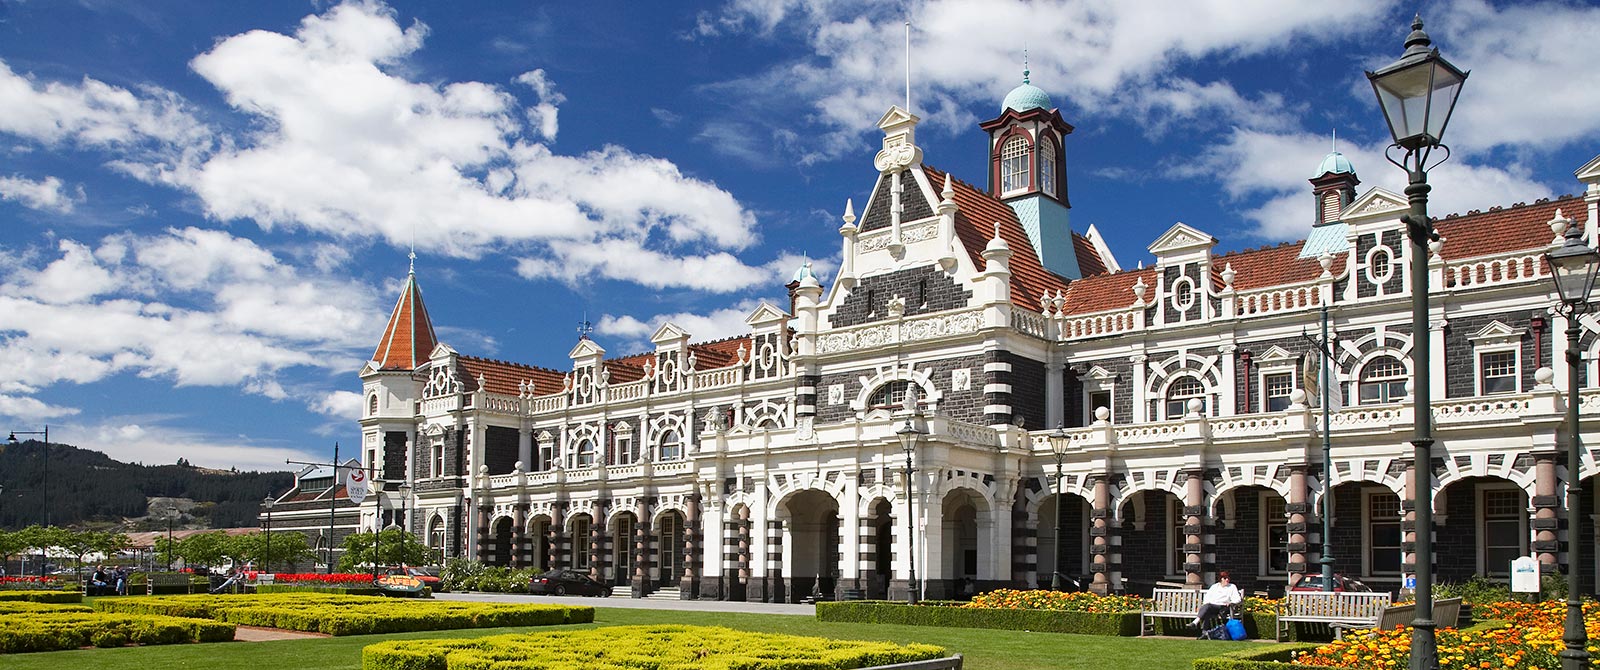 Historic Dunedin Rail Station - Book Your Trip to New Zealand - New Zealand Travel Agency